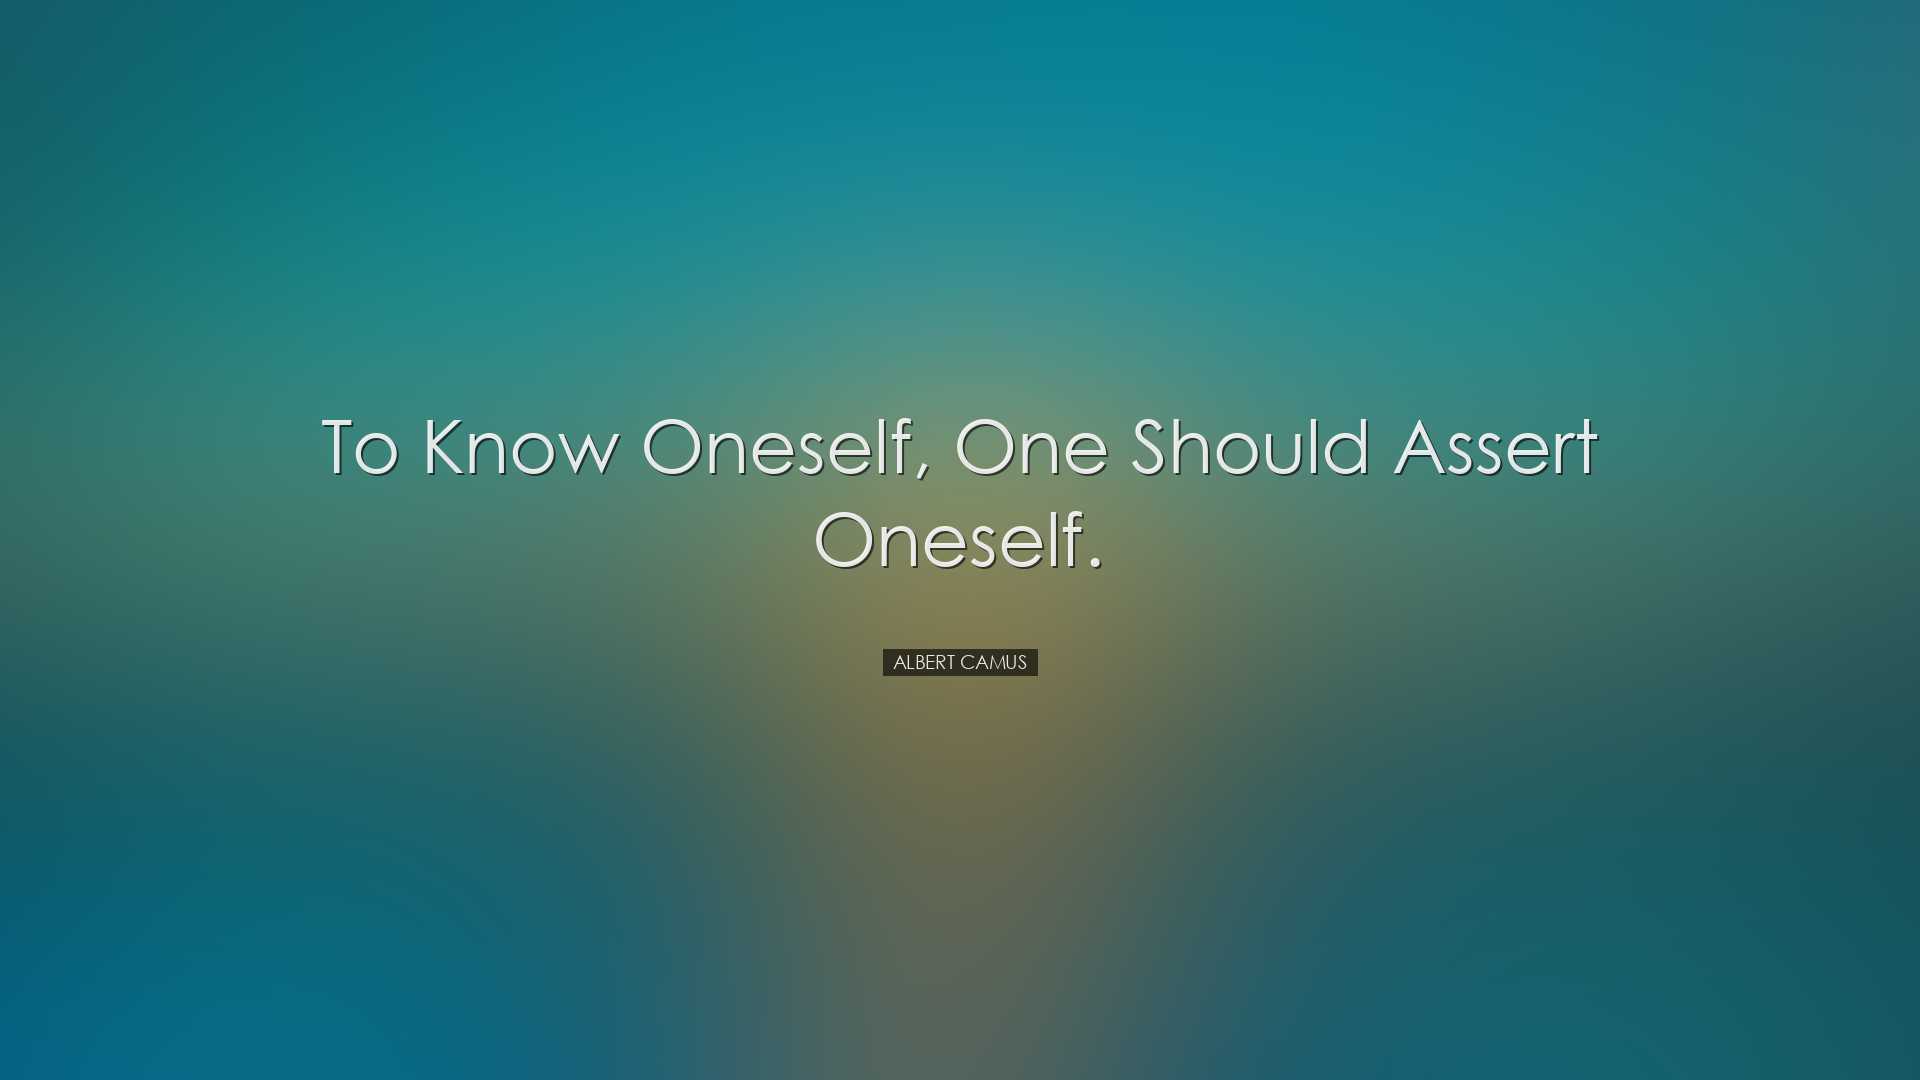 To know oneself, one should assert oneself. - Albert Camus